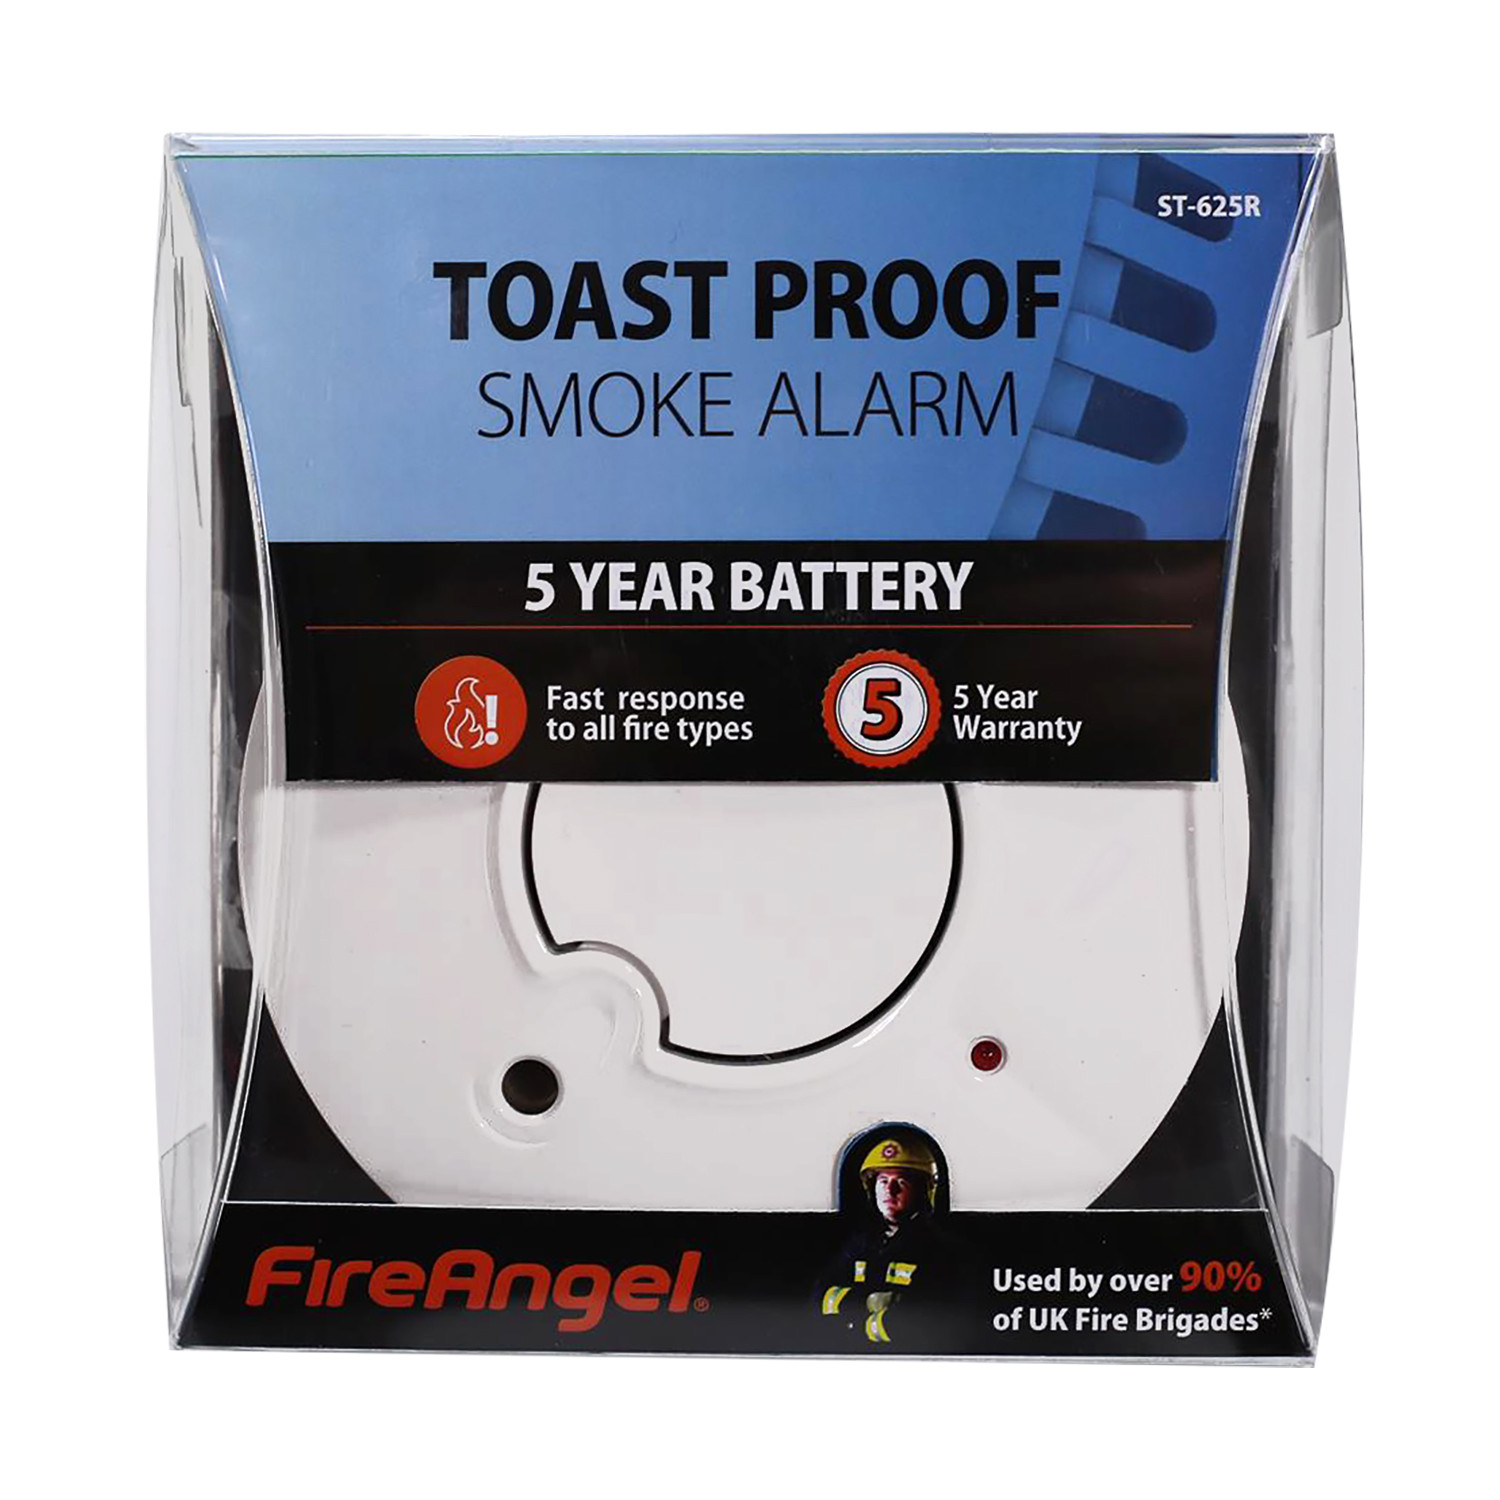 FireAngel 5 Year Battery Toast Proof Smoke Alarm Image 1